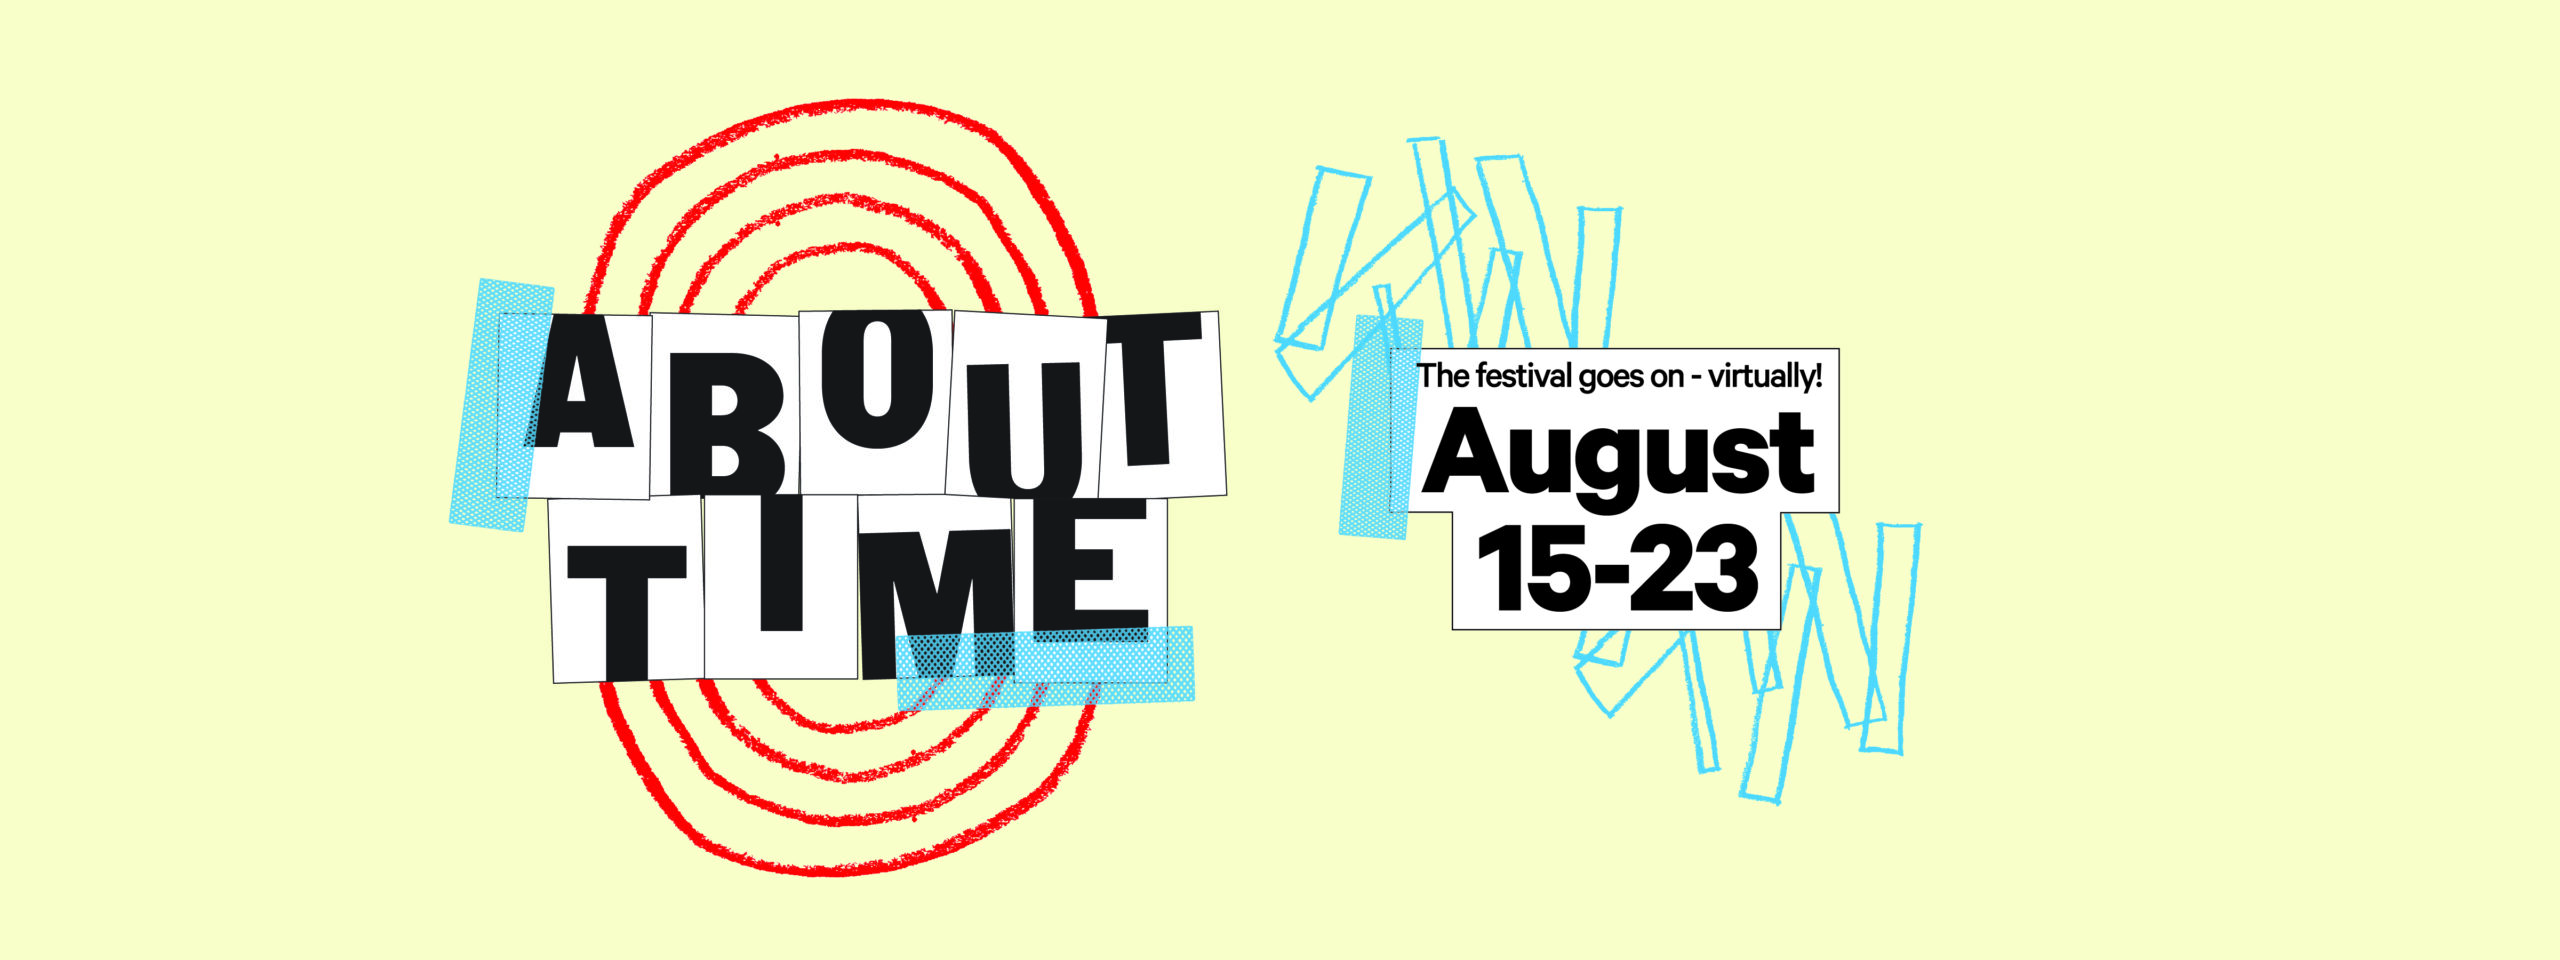 Seattle Design Festival goes on virtually August 15-23